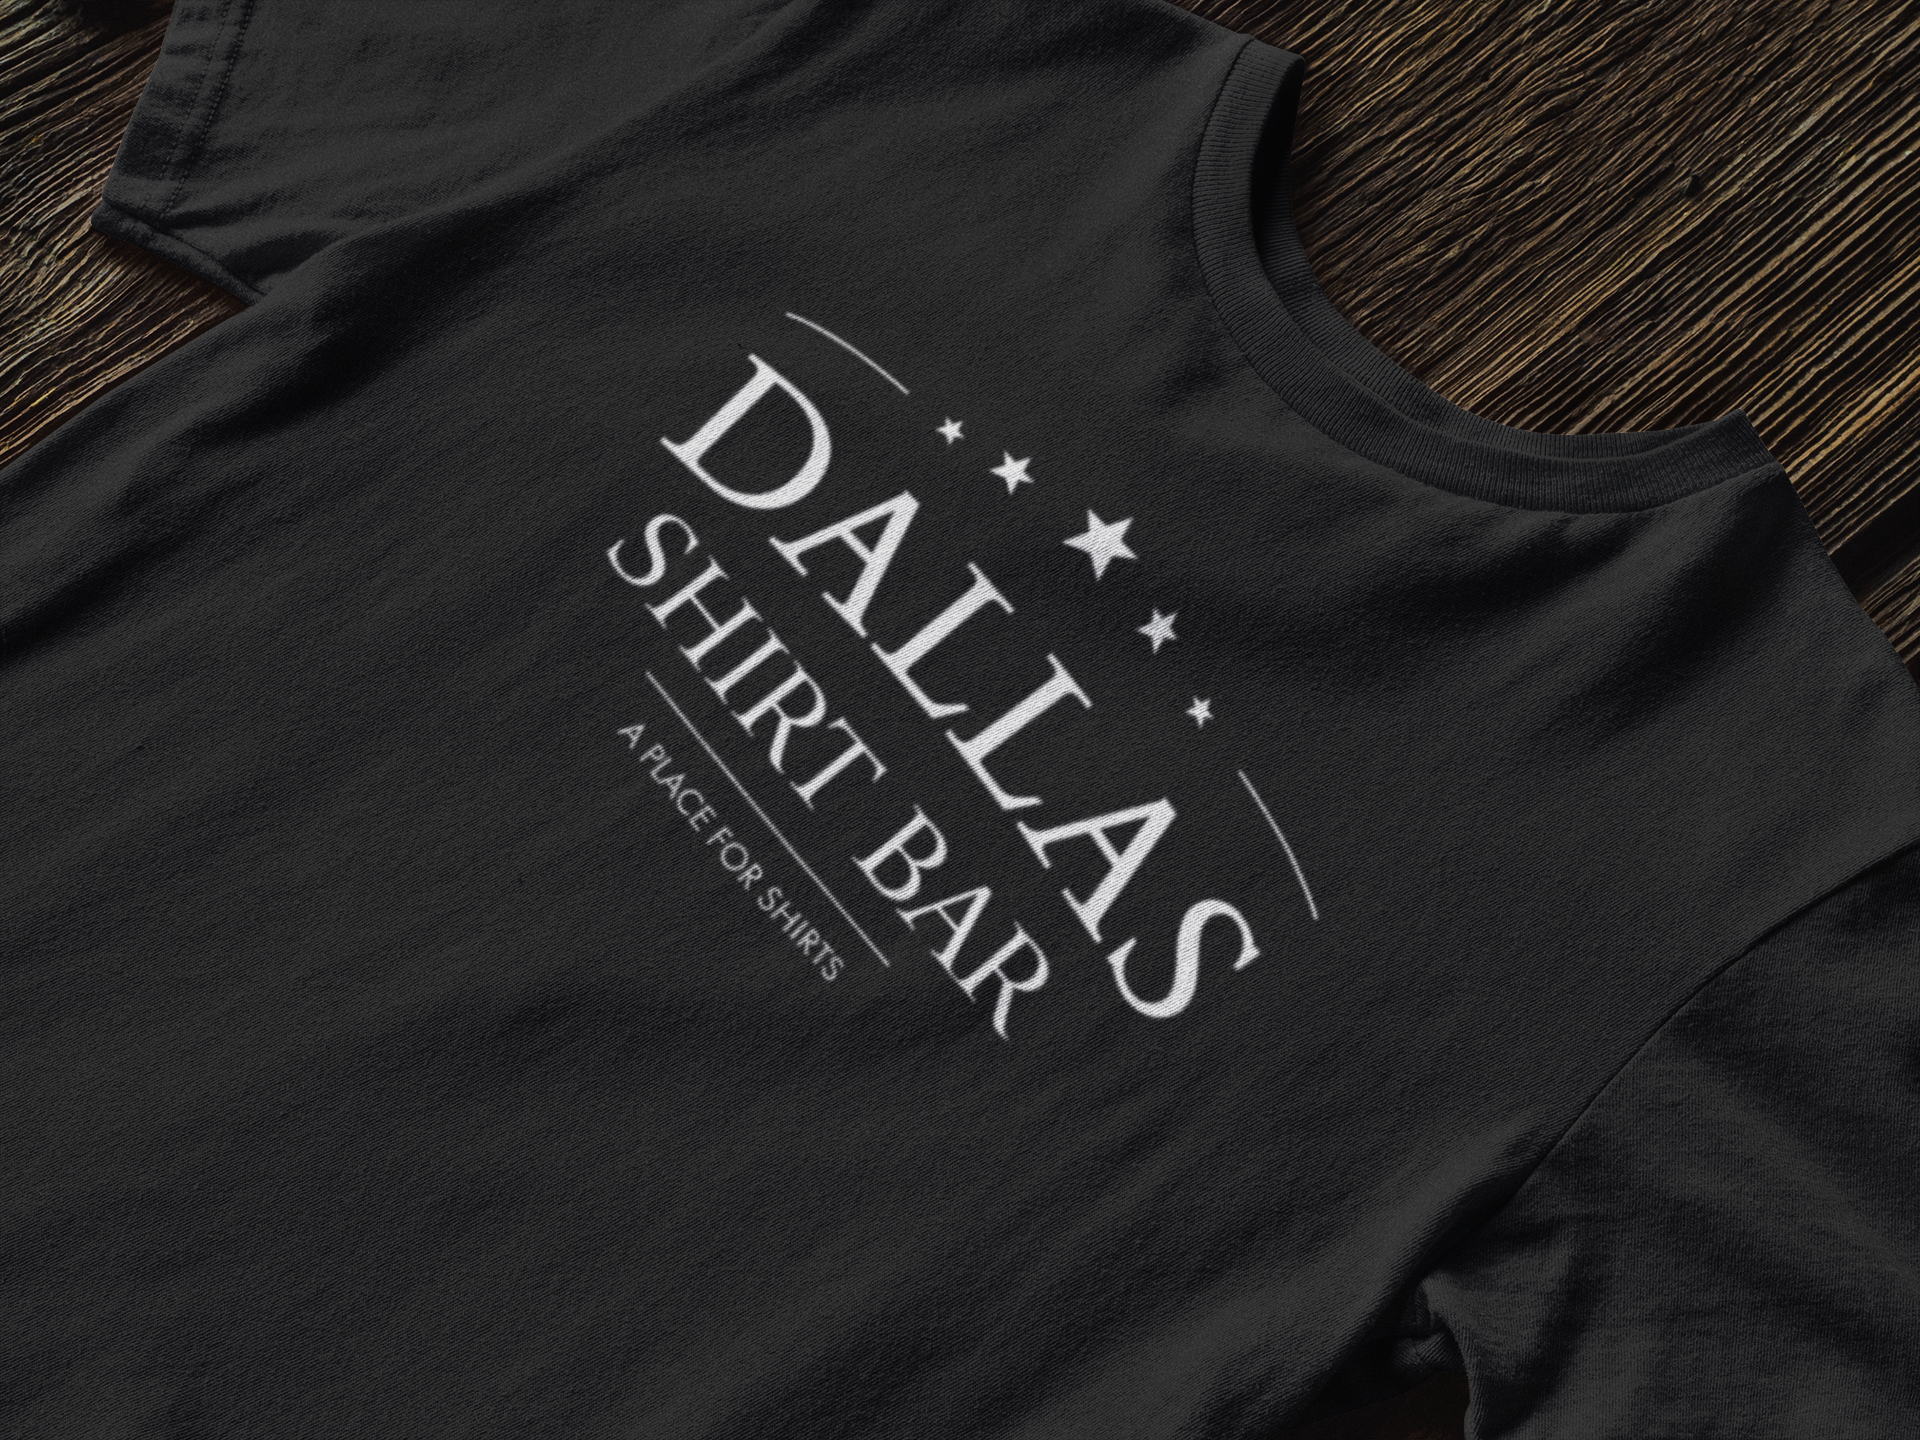 Dallas Shirt Bar Men's Branded Tee